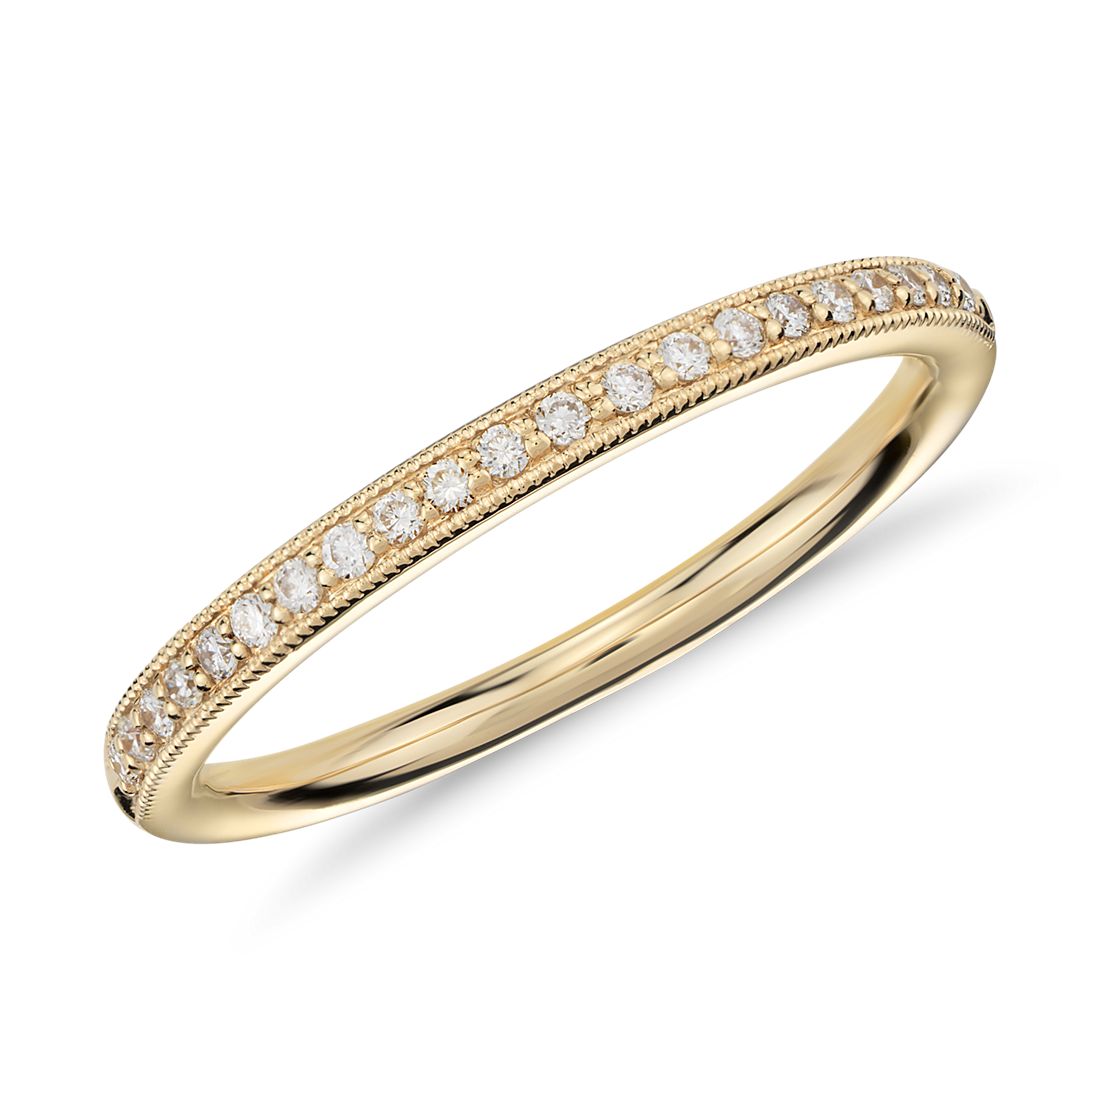 Riviera Pavé Heirloom Diamond Ring in 18k Yellow Gold (1/8 ct. tw.)